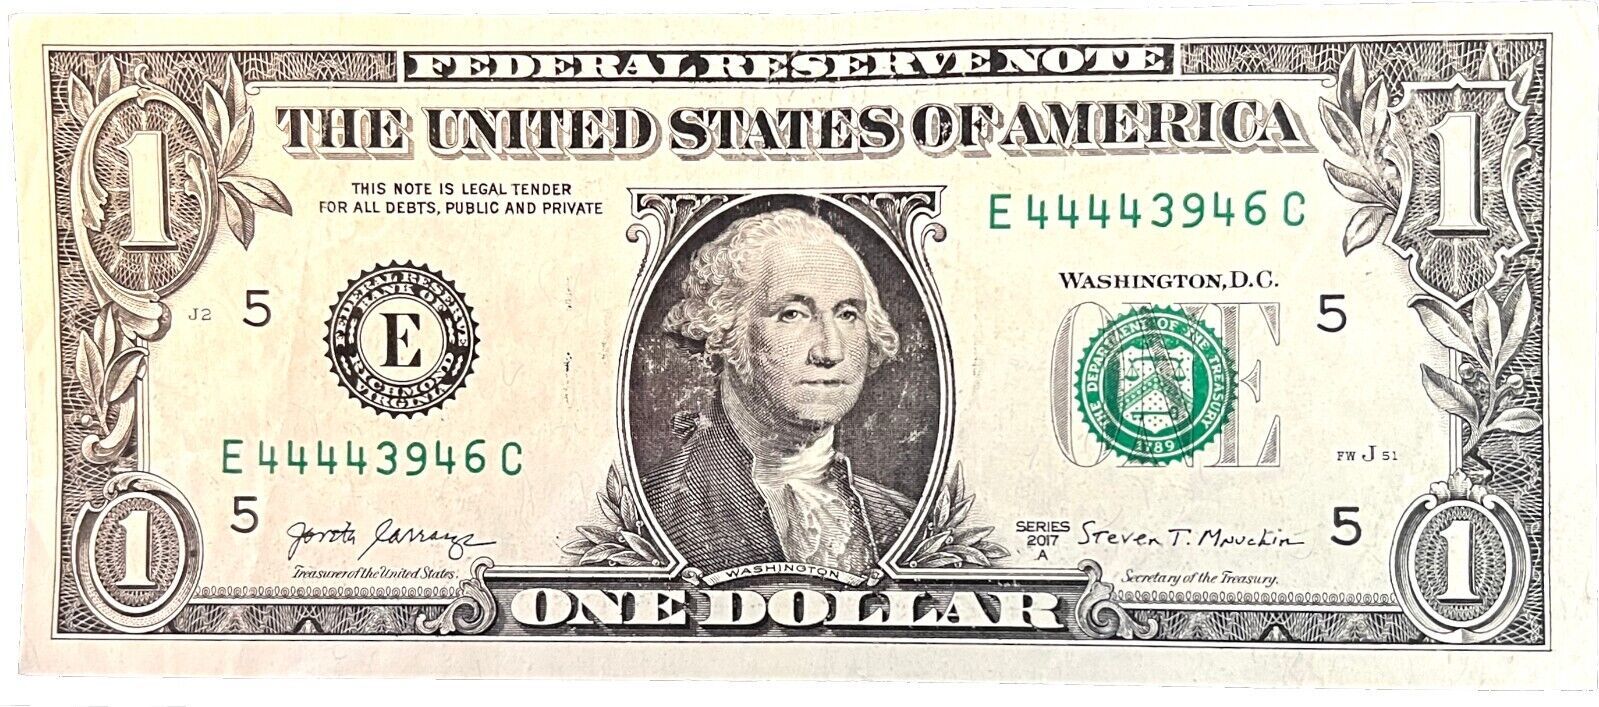 Primary image for $1 One Dollar Bill E 44443946 C 5 4s, 5 oak, fancy serial